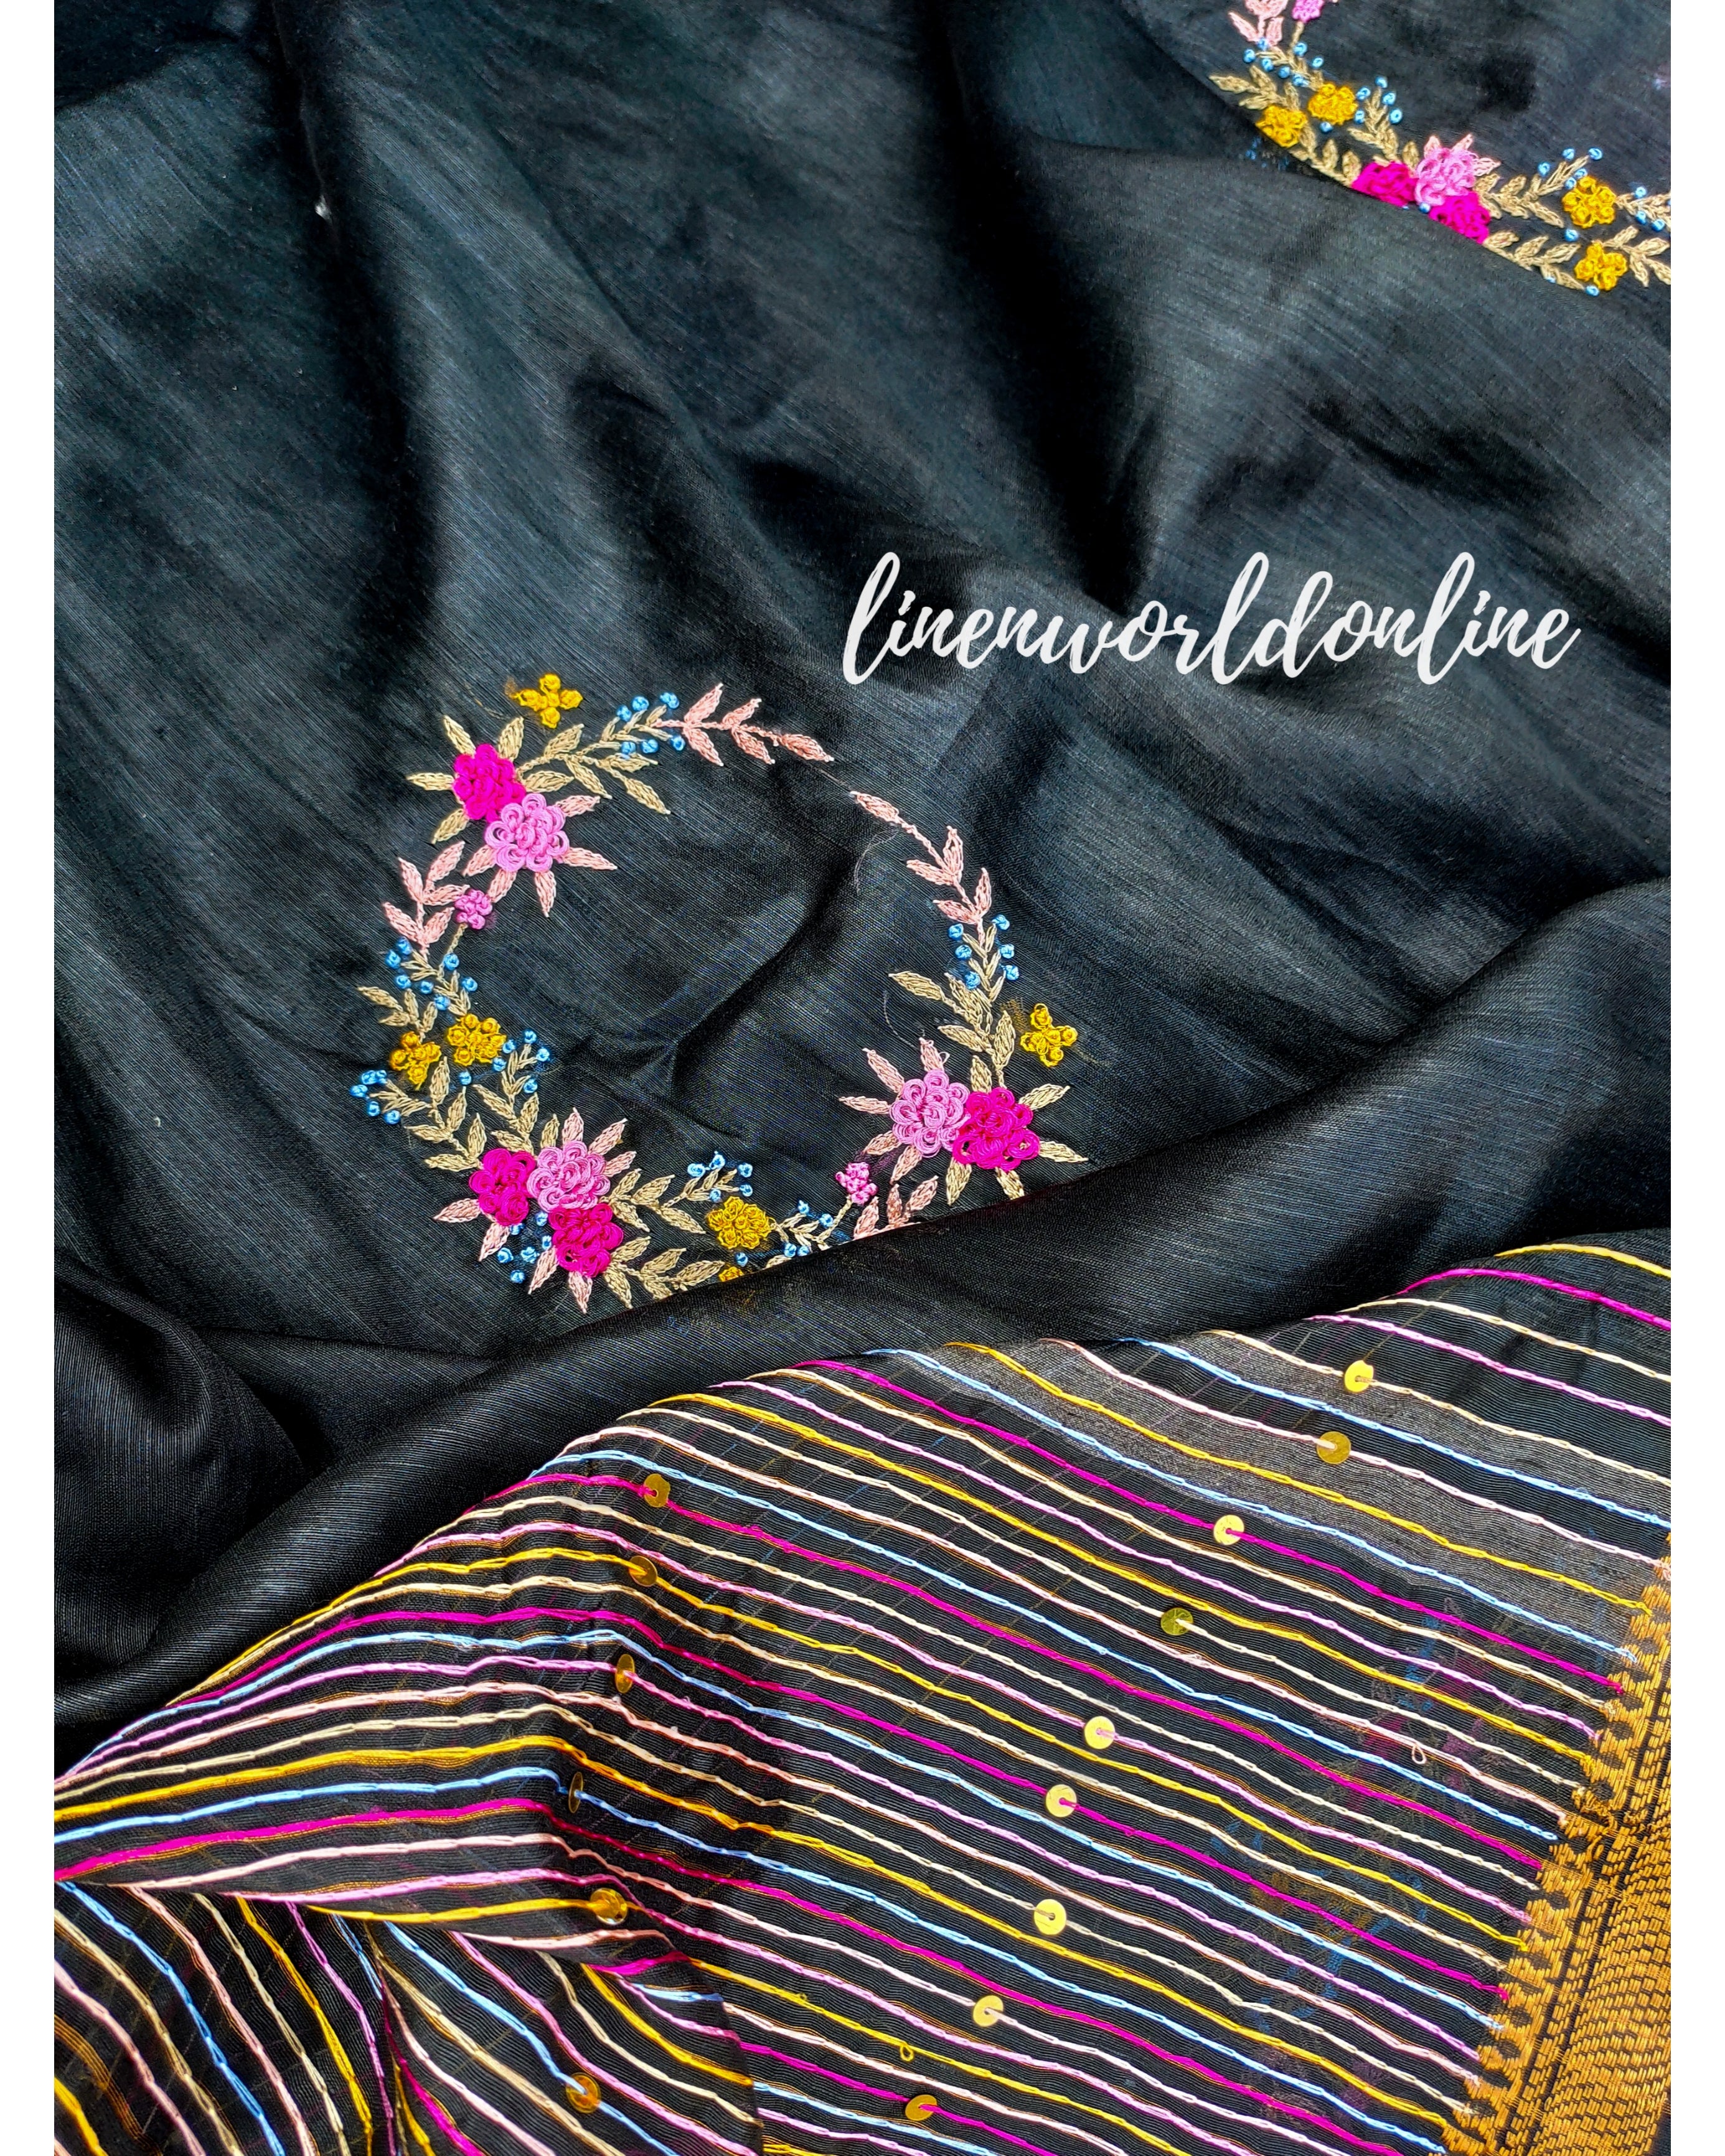 Buy Ultimate collection sarees pure Georgette Big satan patta beautiful  resham patti hand work design contrast shibori dyeing border and blouse  designer saree (German blue) at Amazon.in